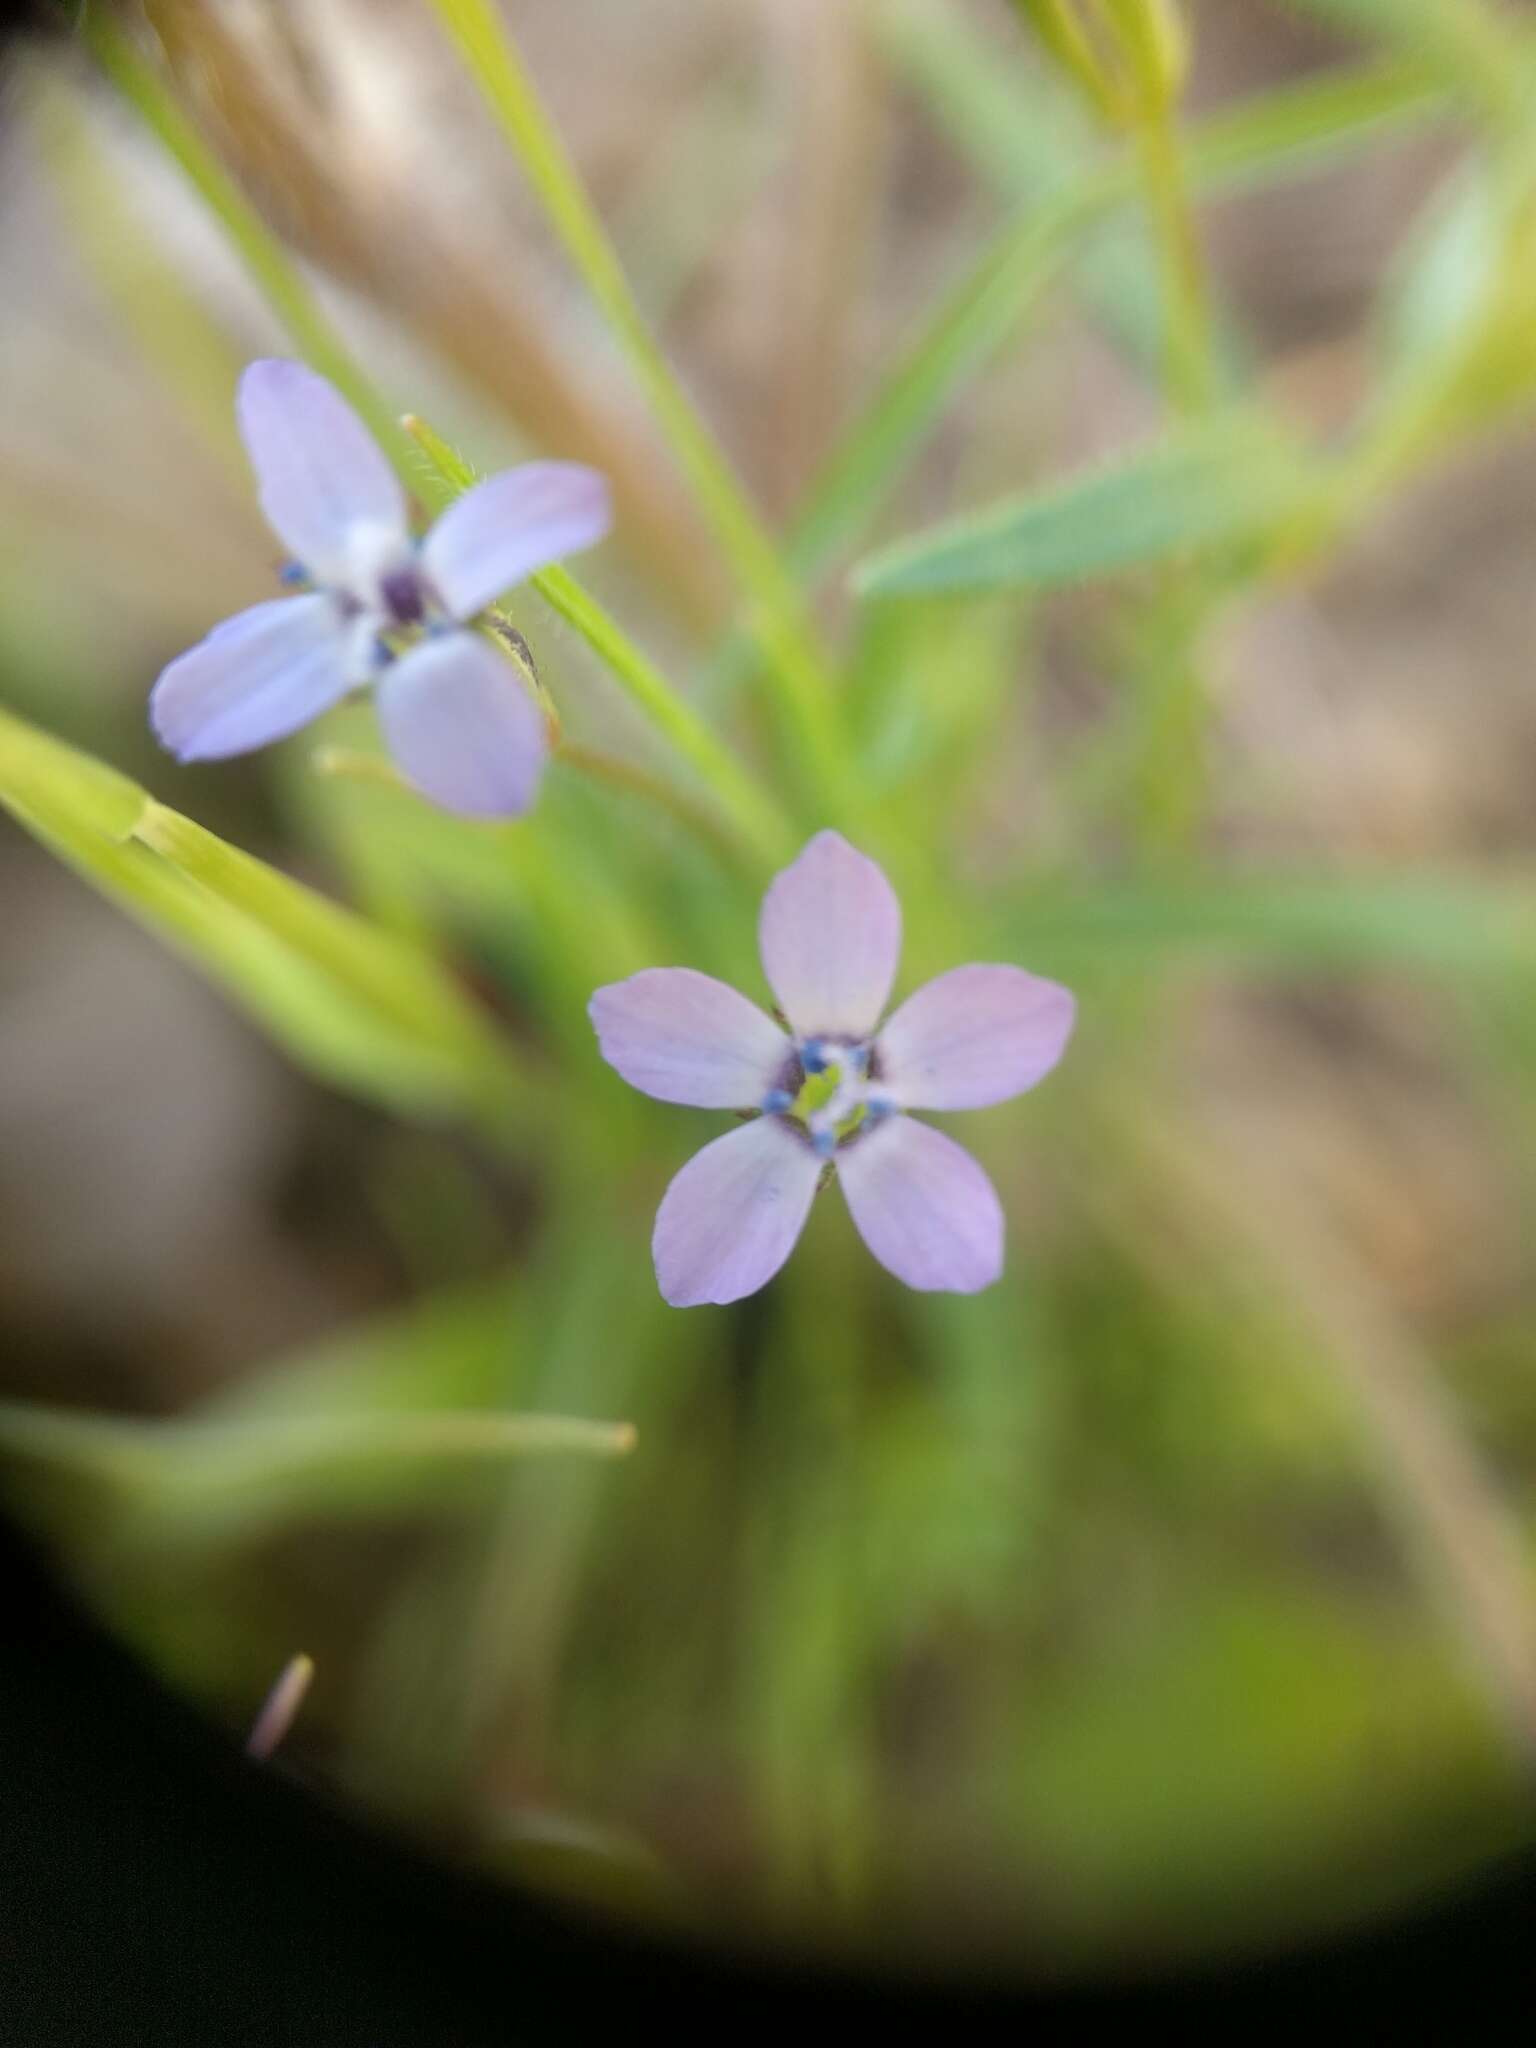 Image of purplespot gilia